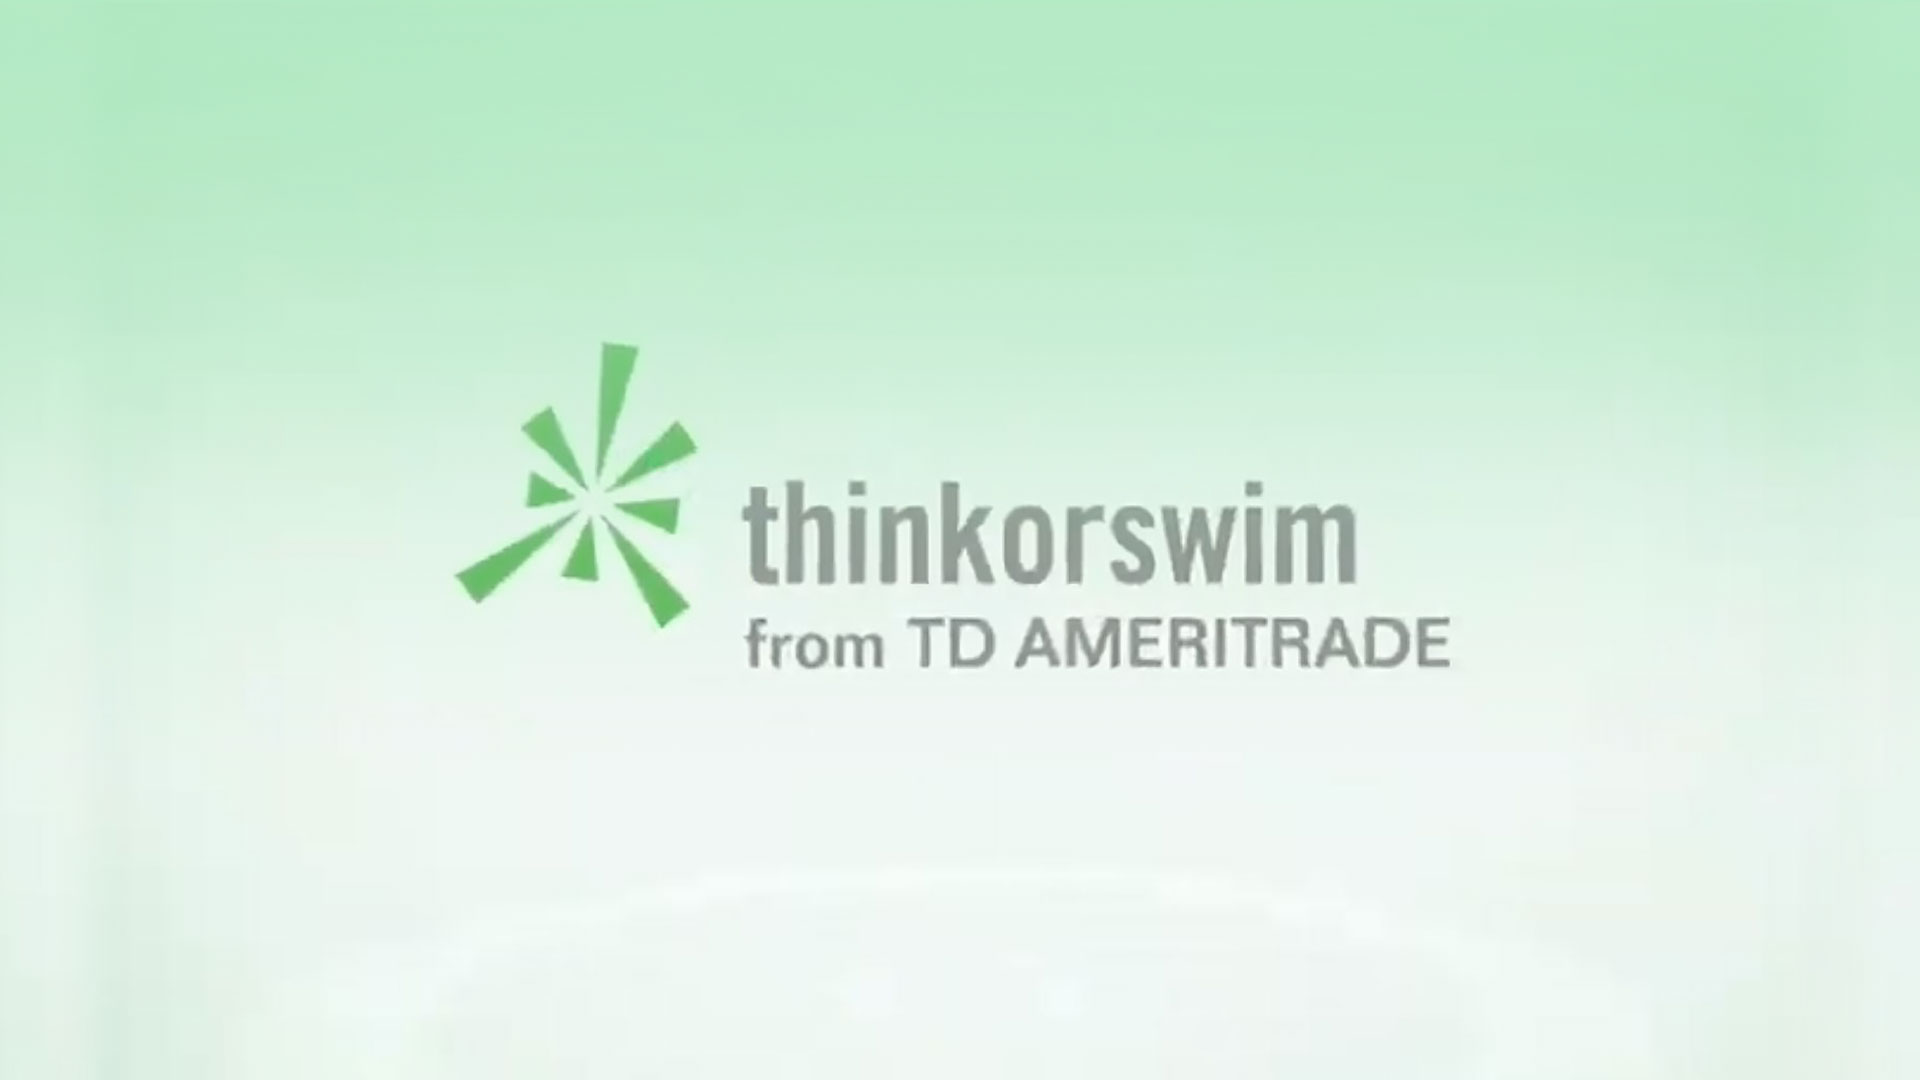 TD Ameritrade thinkorswim Product Video | Nyquist Design